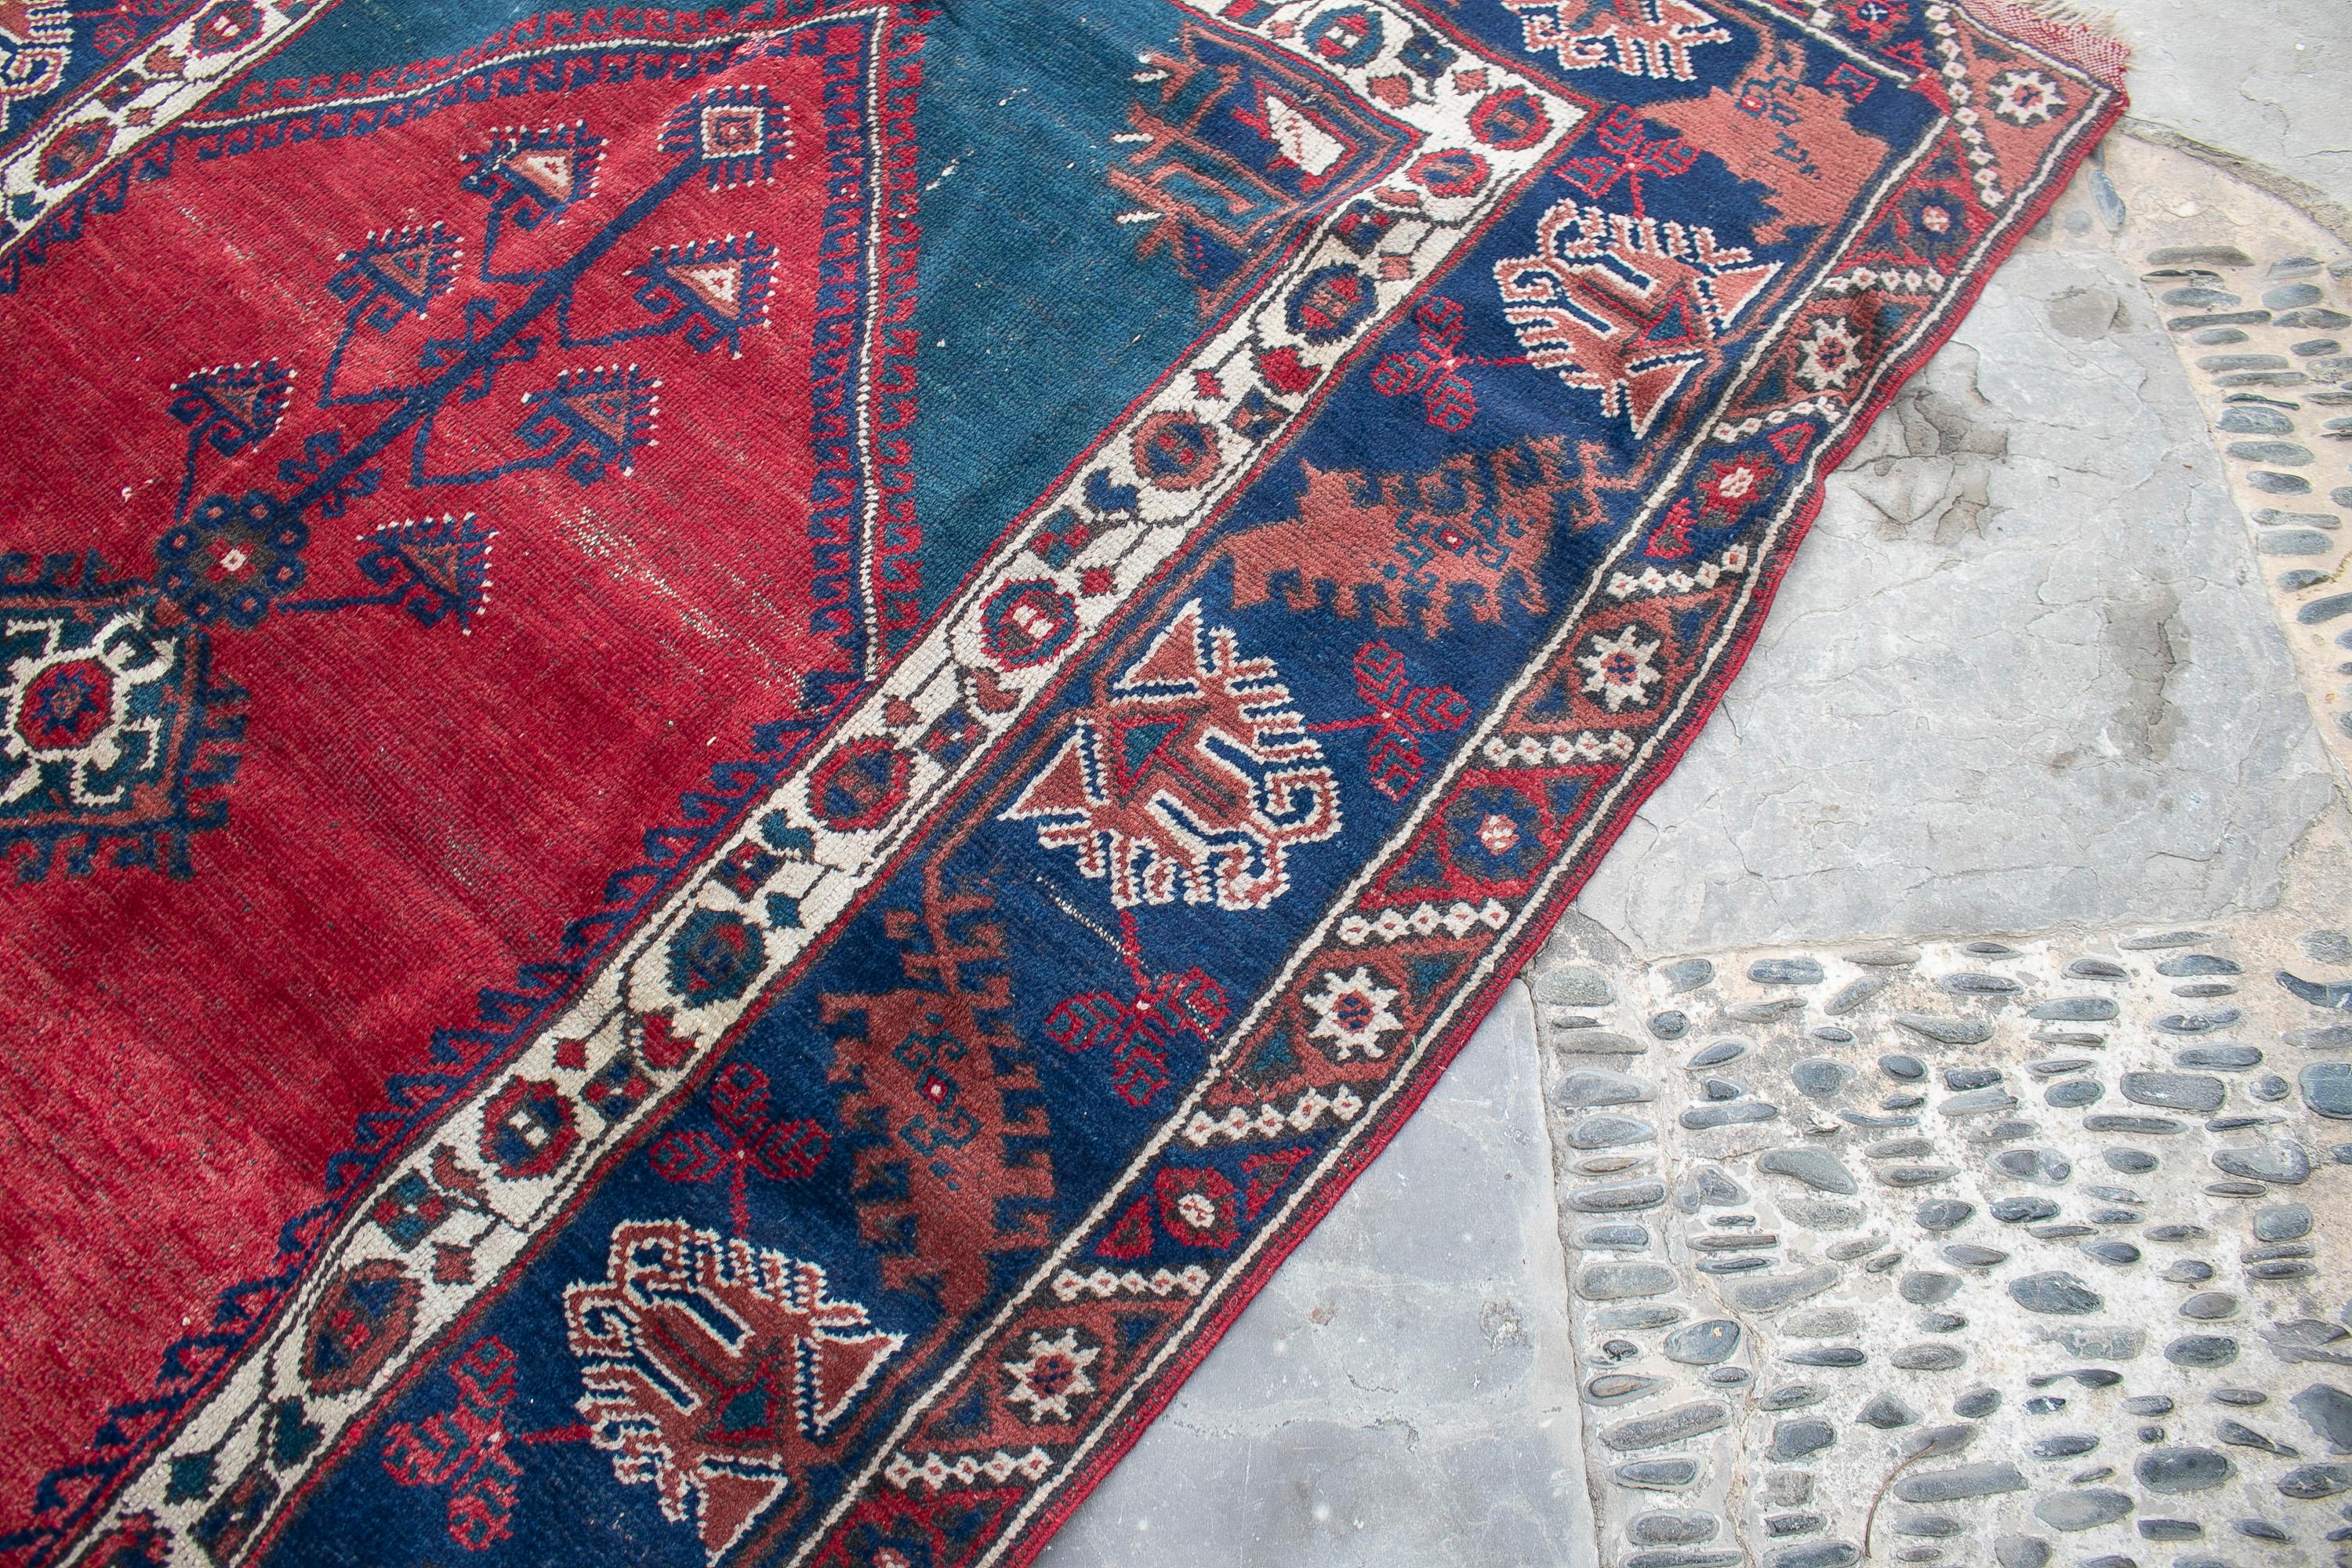 19th Century Turkish Kilim Wool Carpet Rug For Sale 6